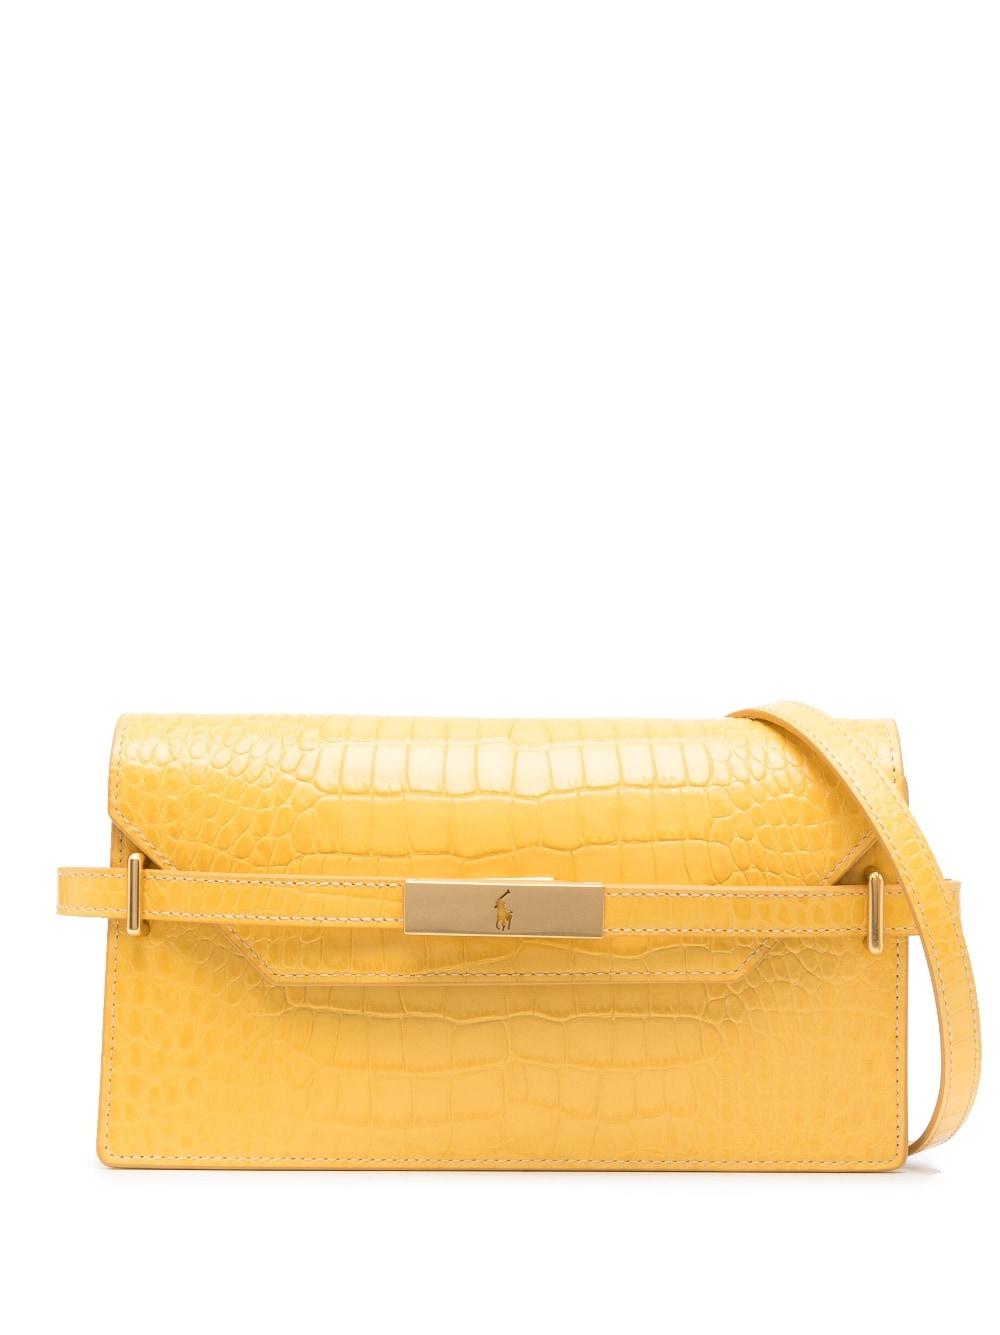 Polo Ralph Lauren Crocodile-effect Leather Clutch Bag in Yellow | Lyst